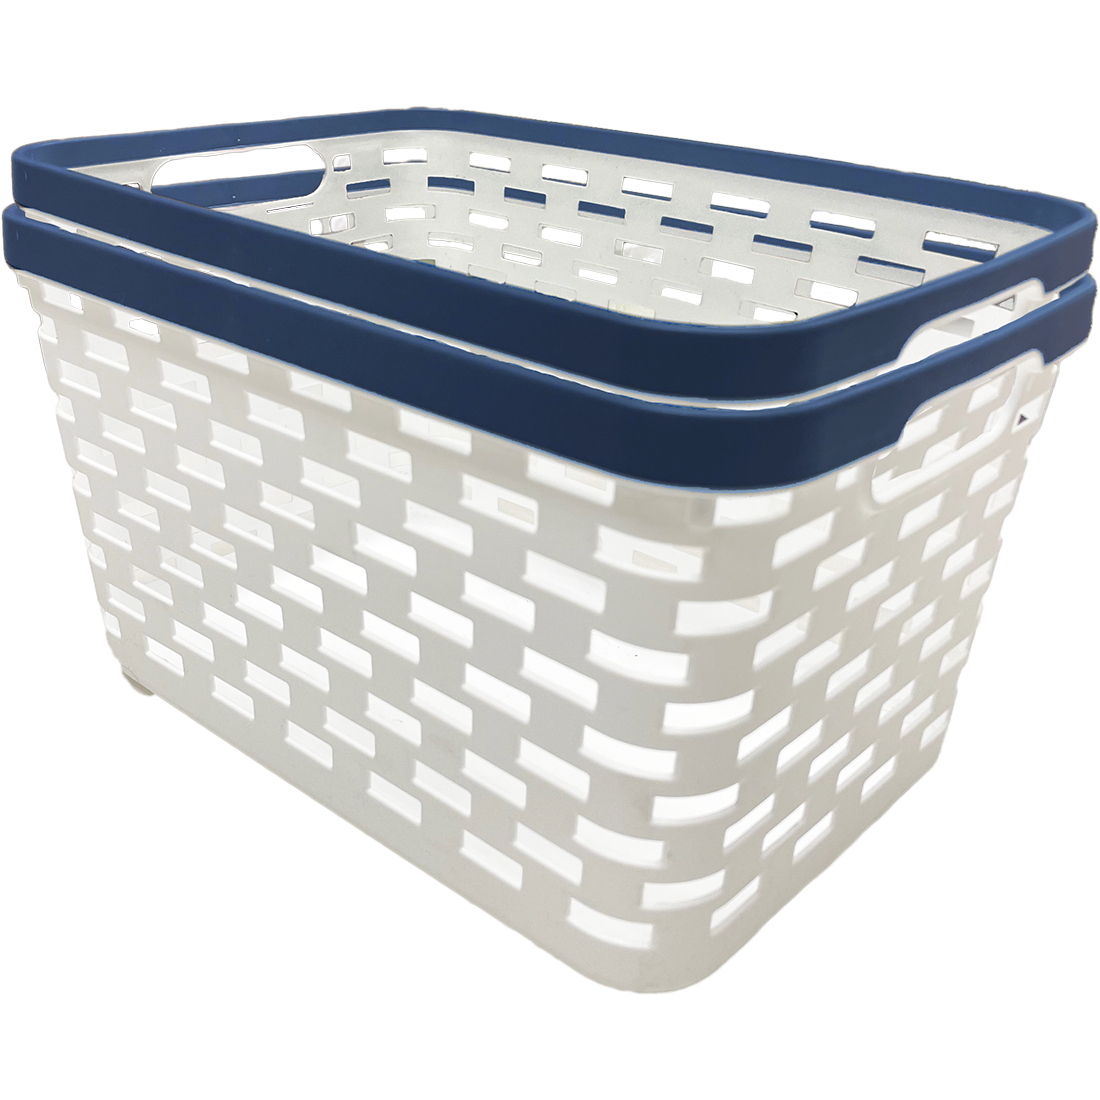 2 Pack Woven Plastic Storage Basket - White & Navy